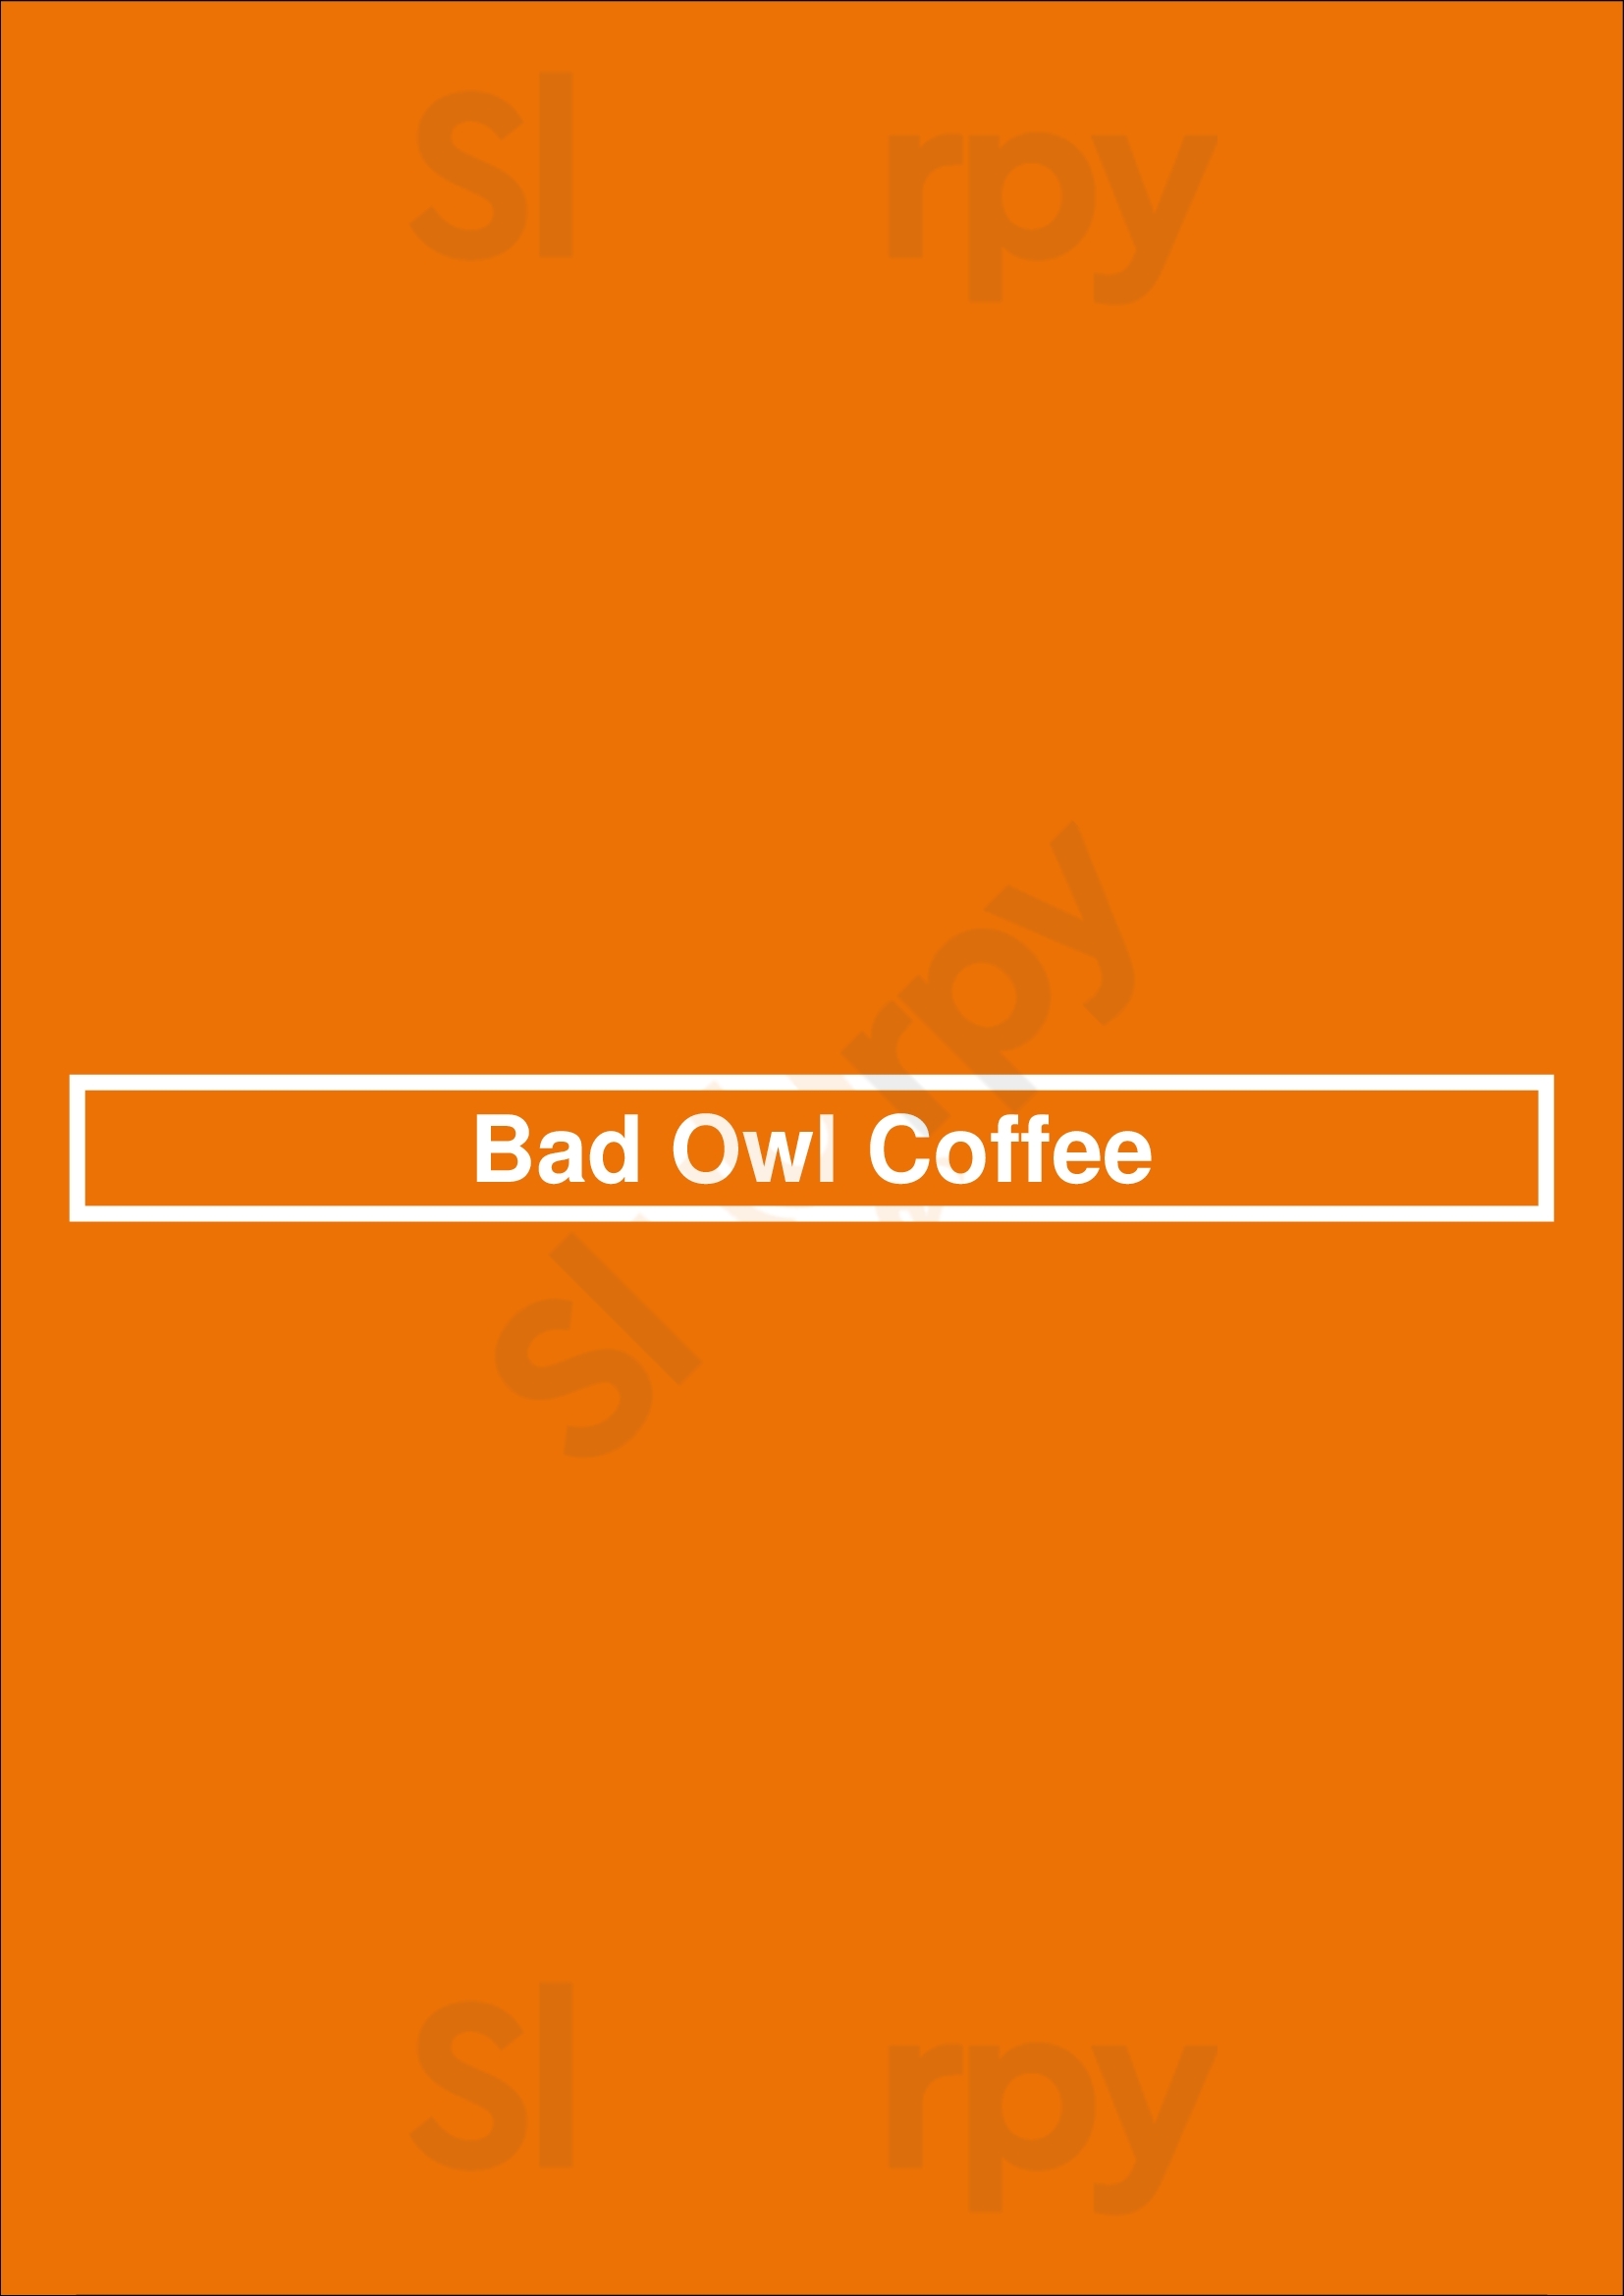 Bad Owl Coffee Colchester Menu - 1